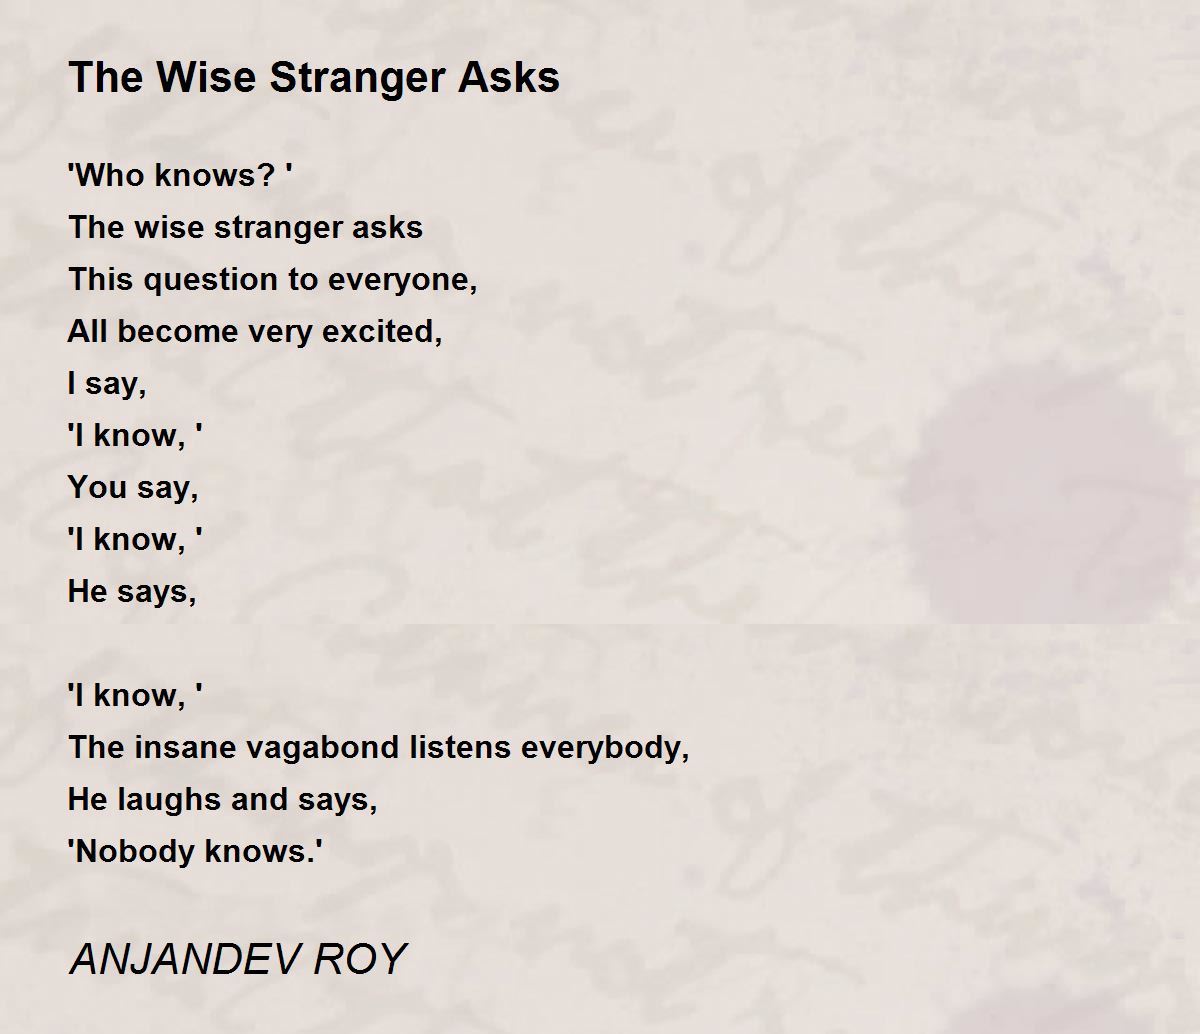 The Wise Stranger Asks - The Wise Stranger Asks Poem by ANJANDEV ROY